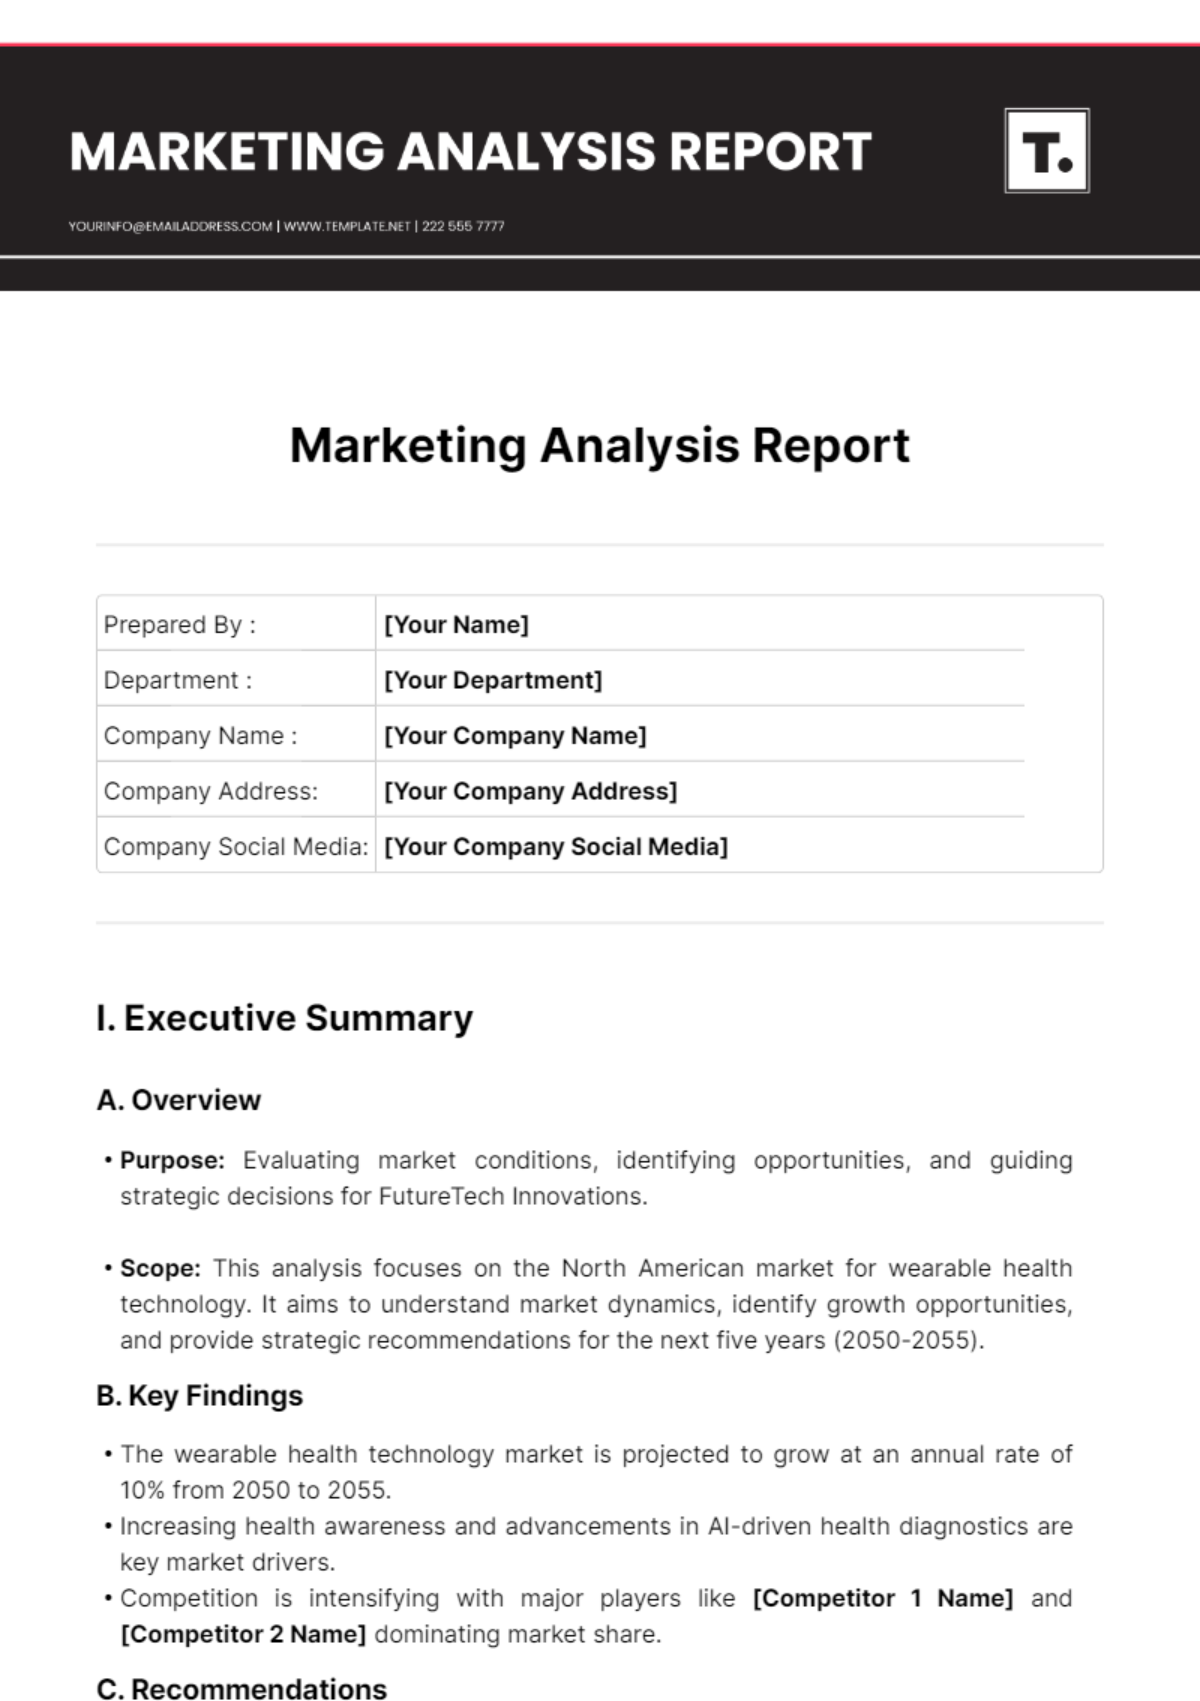 Marketing Analysis Report Template